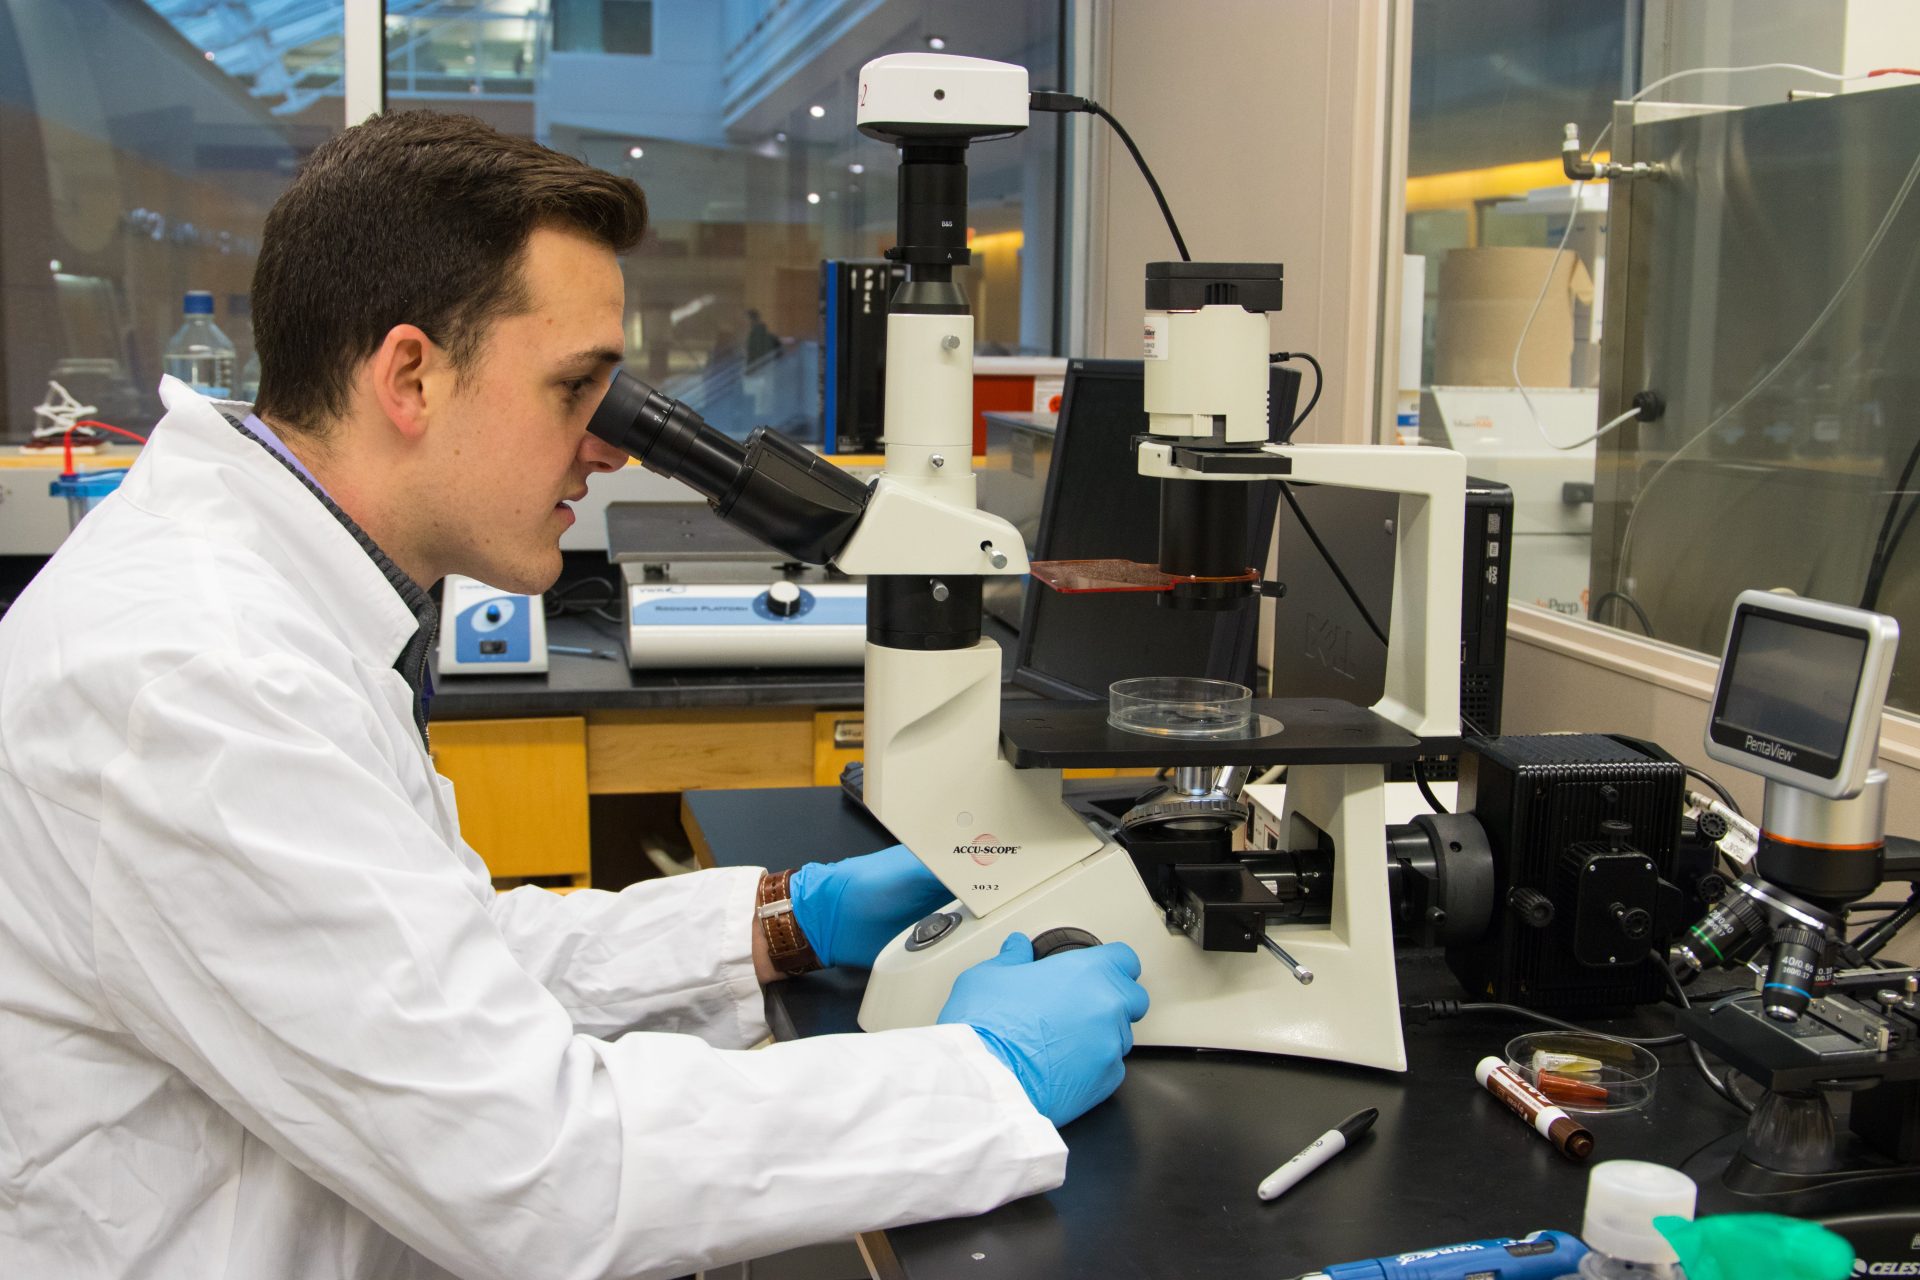 Andrew Milcarek, a Translational Biomedical Sciences major at Rowan University, observes a specimen under a microscope.